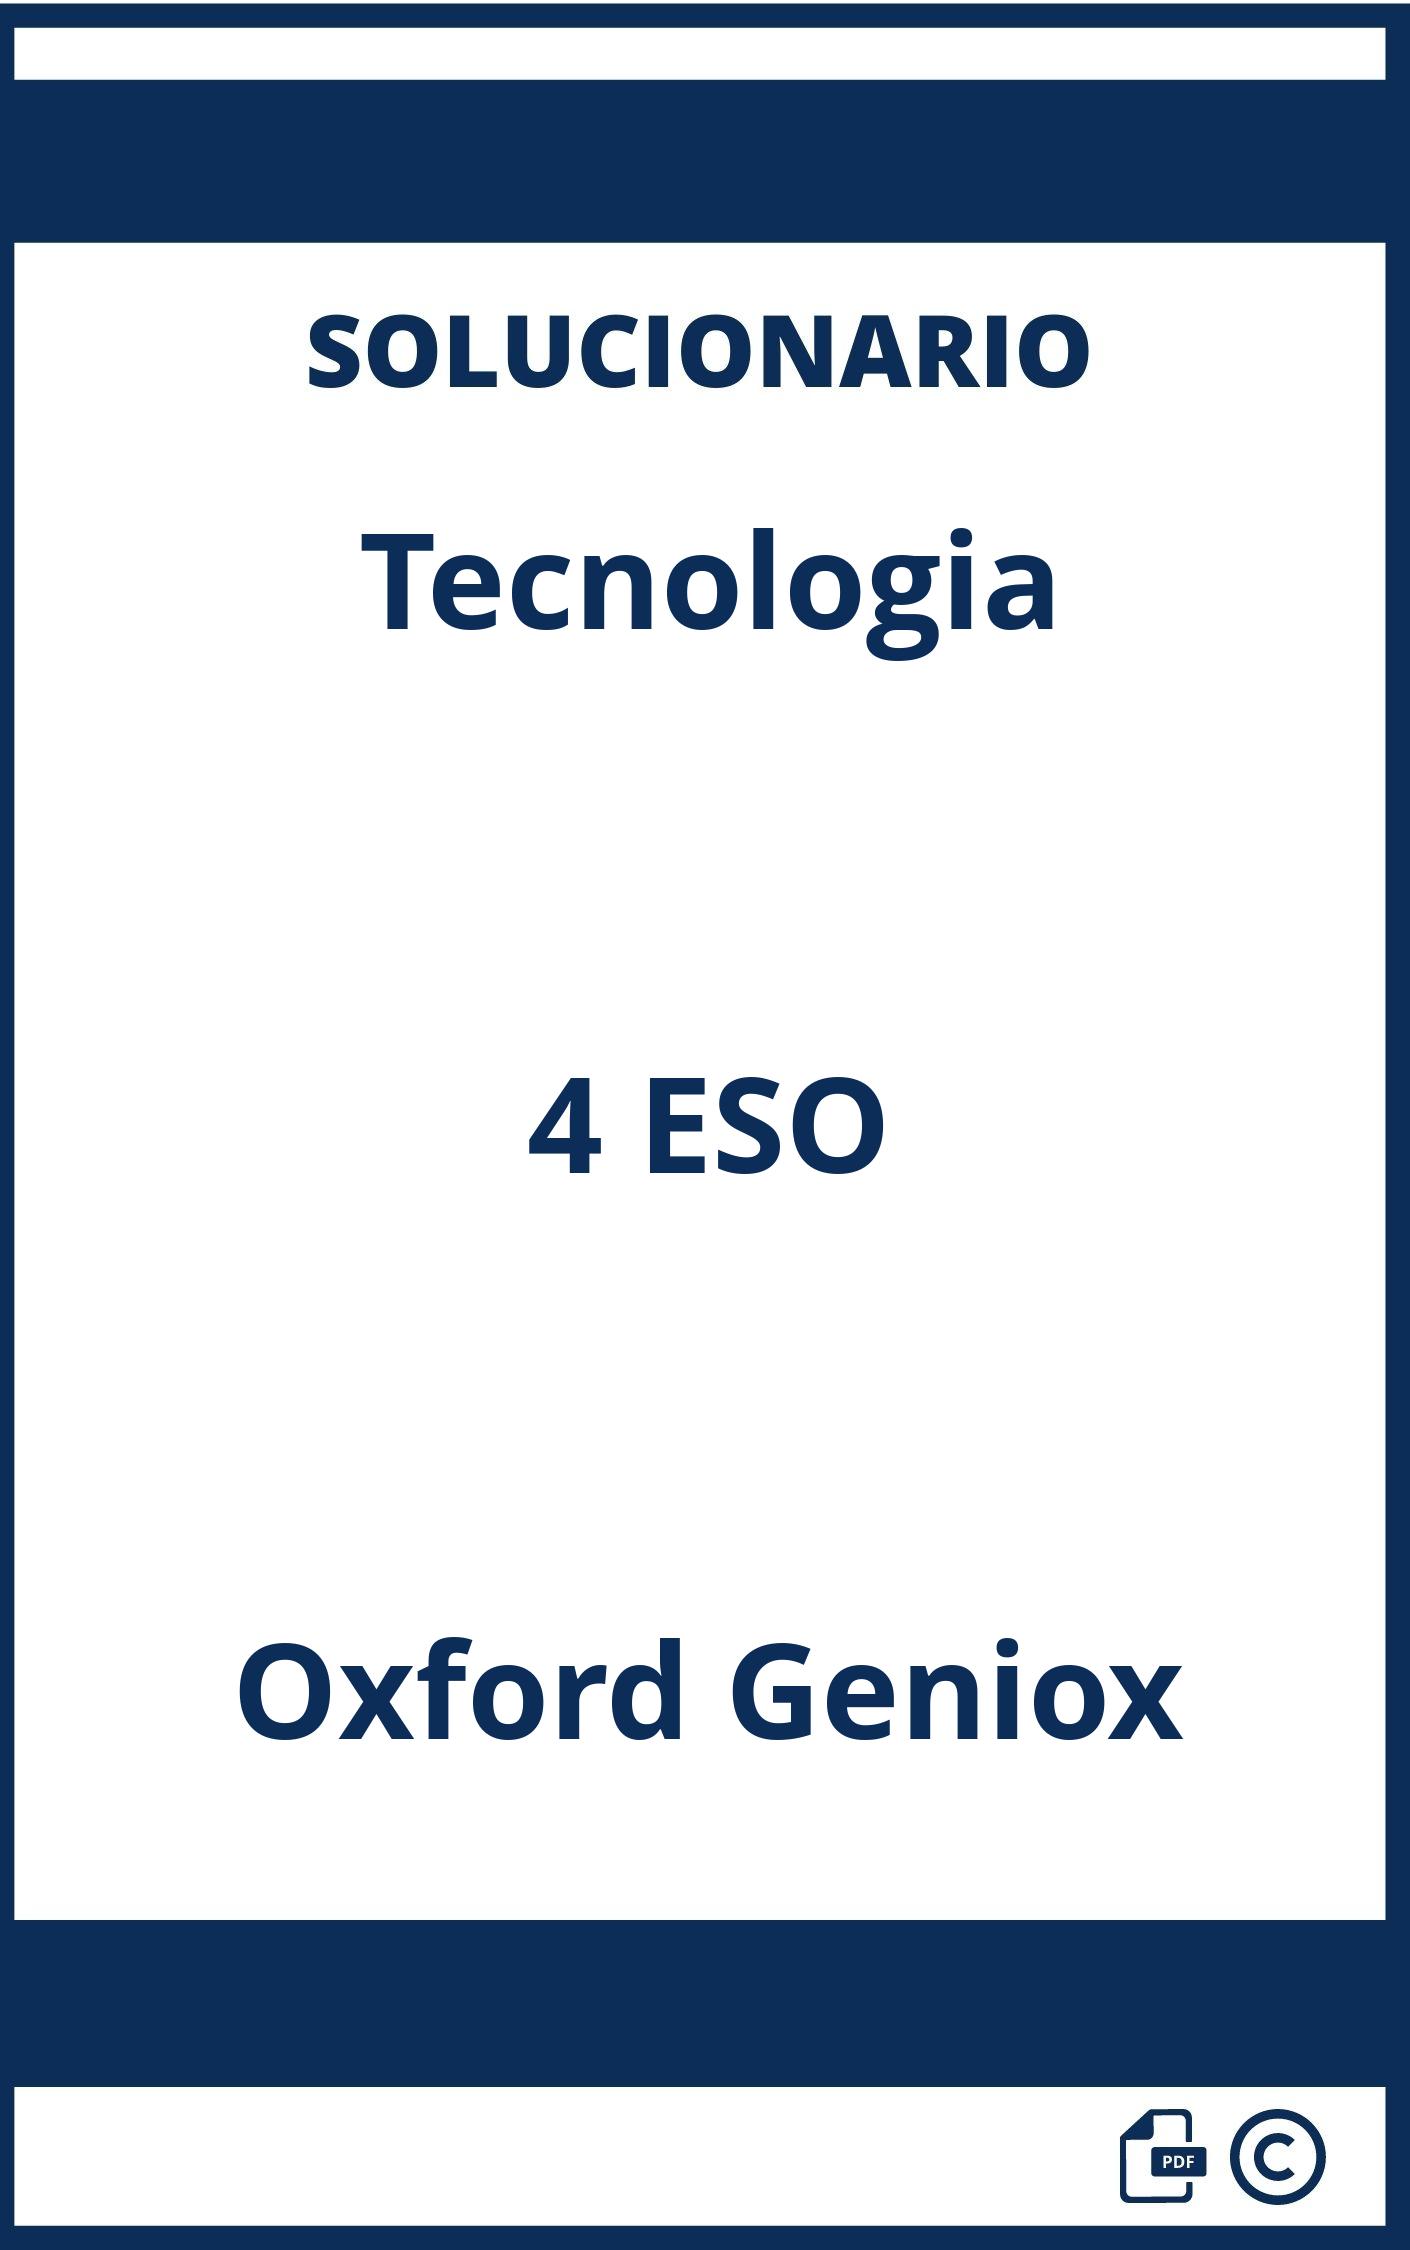 Solucionario Tecnologia 4 ESO Oxford Geniox